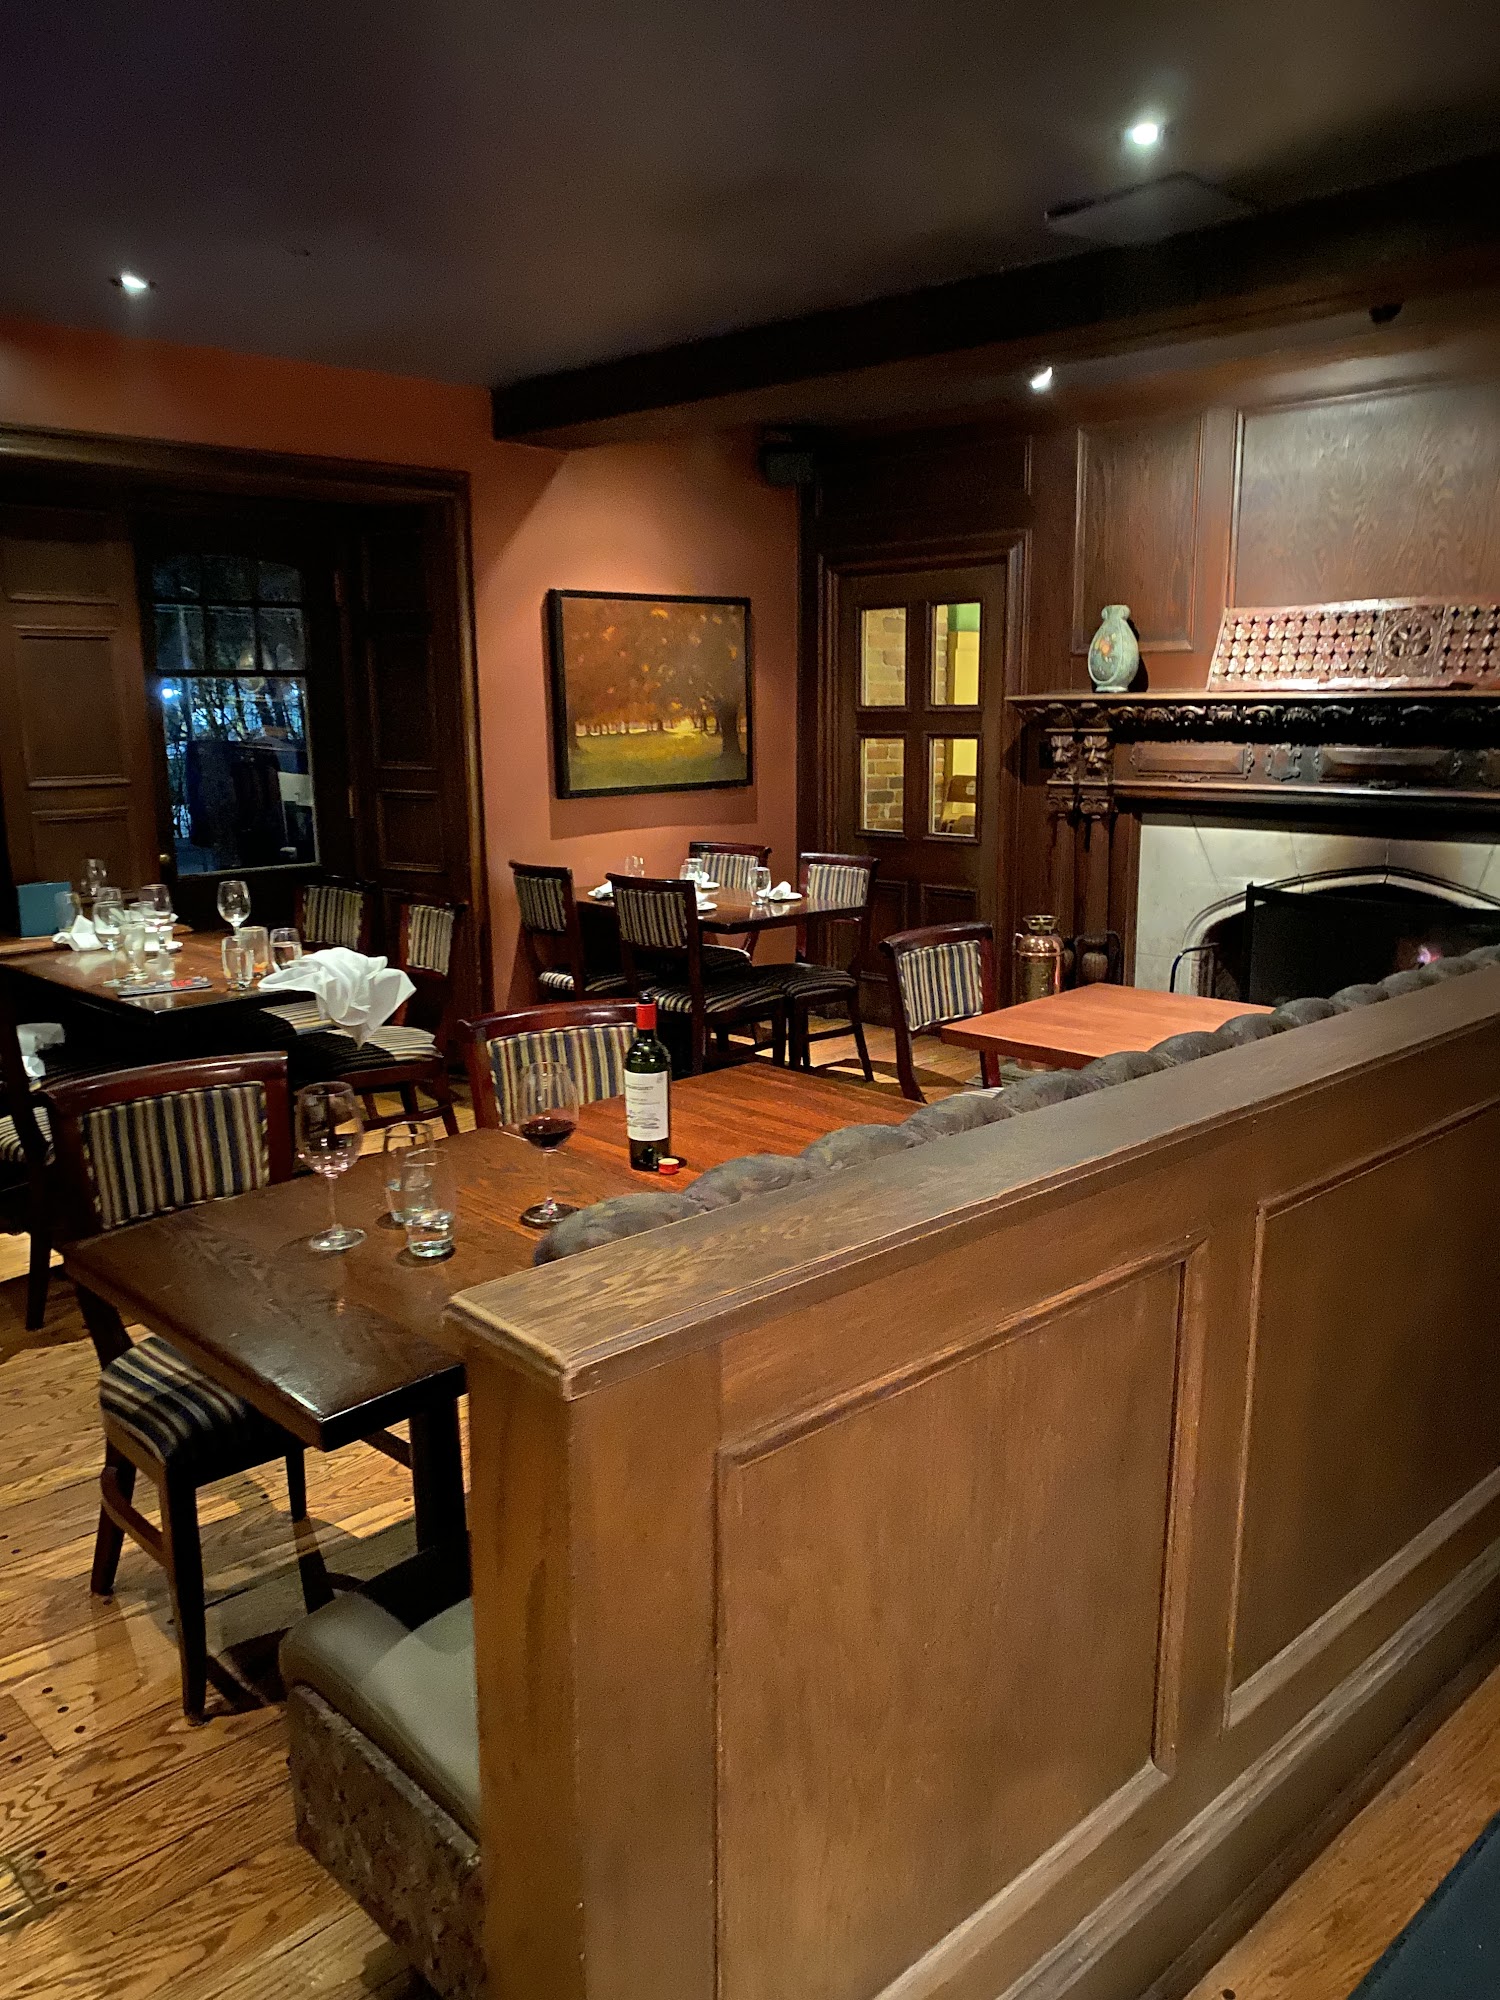 The Keg Steakhouse + Bar - Ottawa Manor